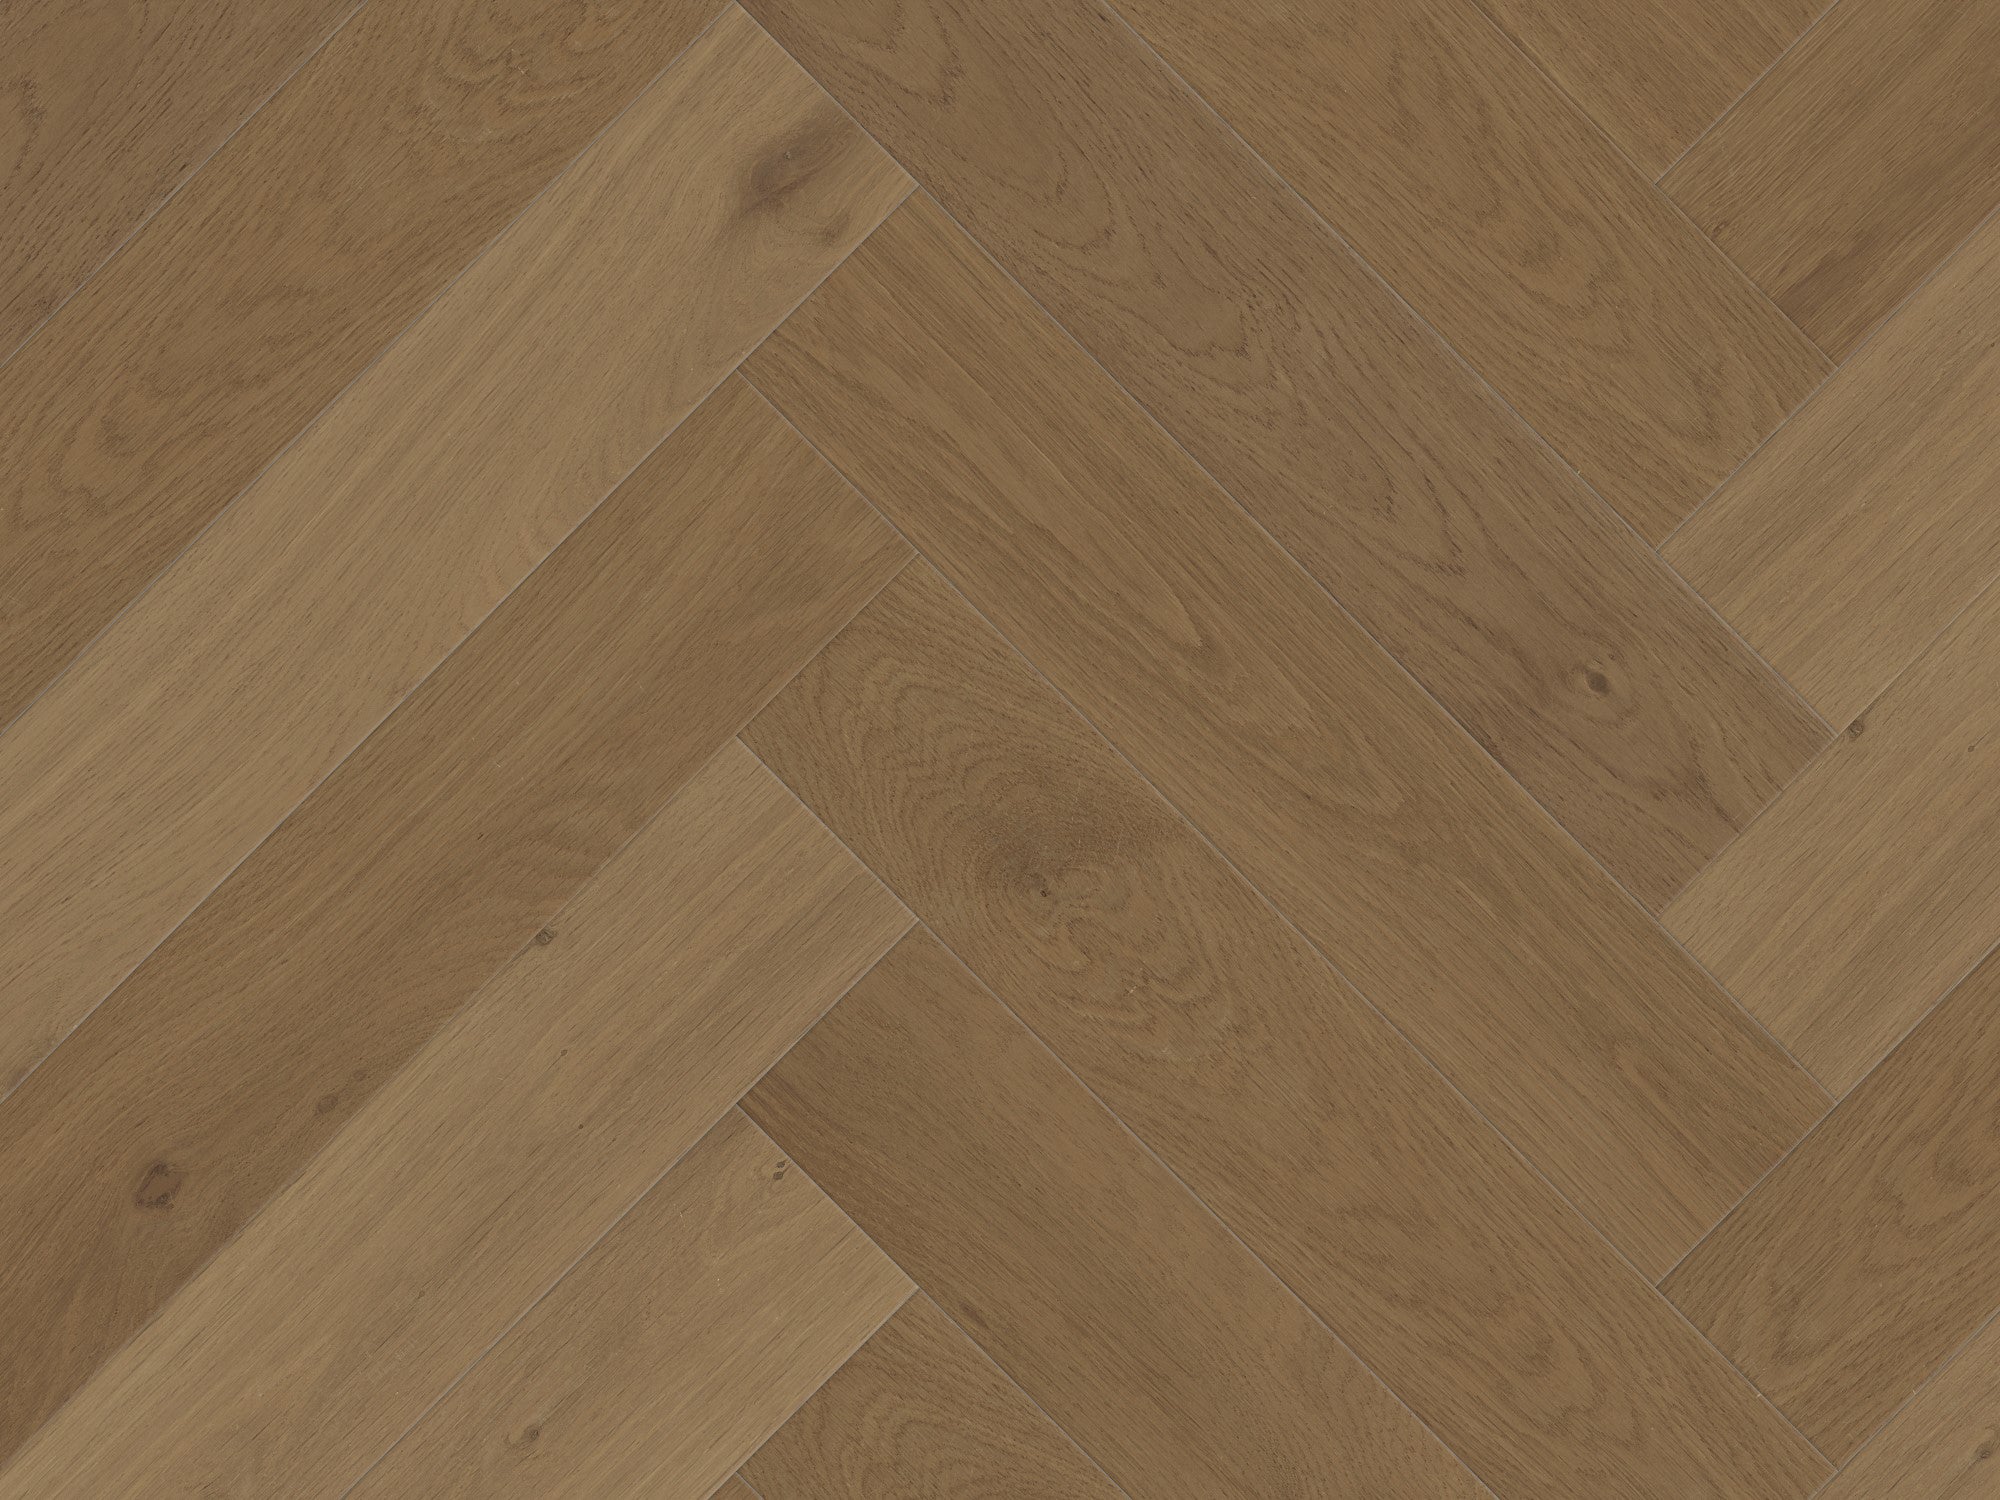 duchateau signature terra alpine herringbone european oak engineered hardnatural wood floor uv lacquer finish for interior use distributed by surface group international